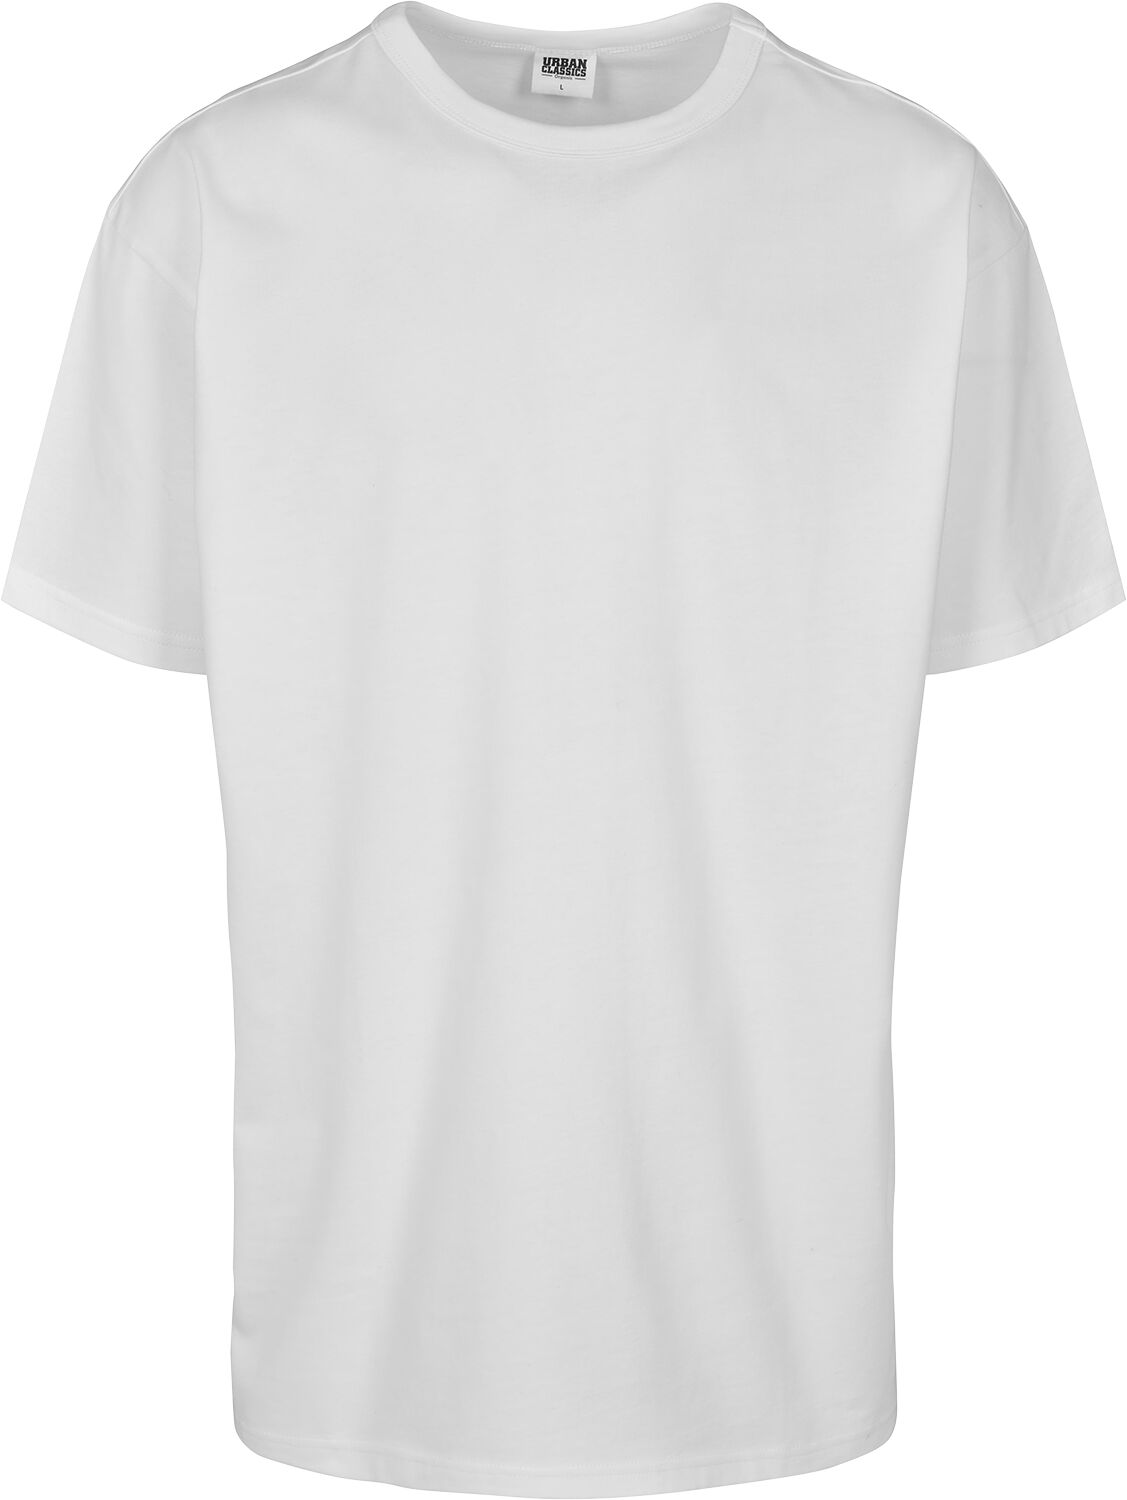 Image of T-Shirt di Urban Classics - Organic Basic Tee - S a 5XL - Uomo - bianco